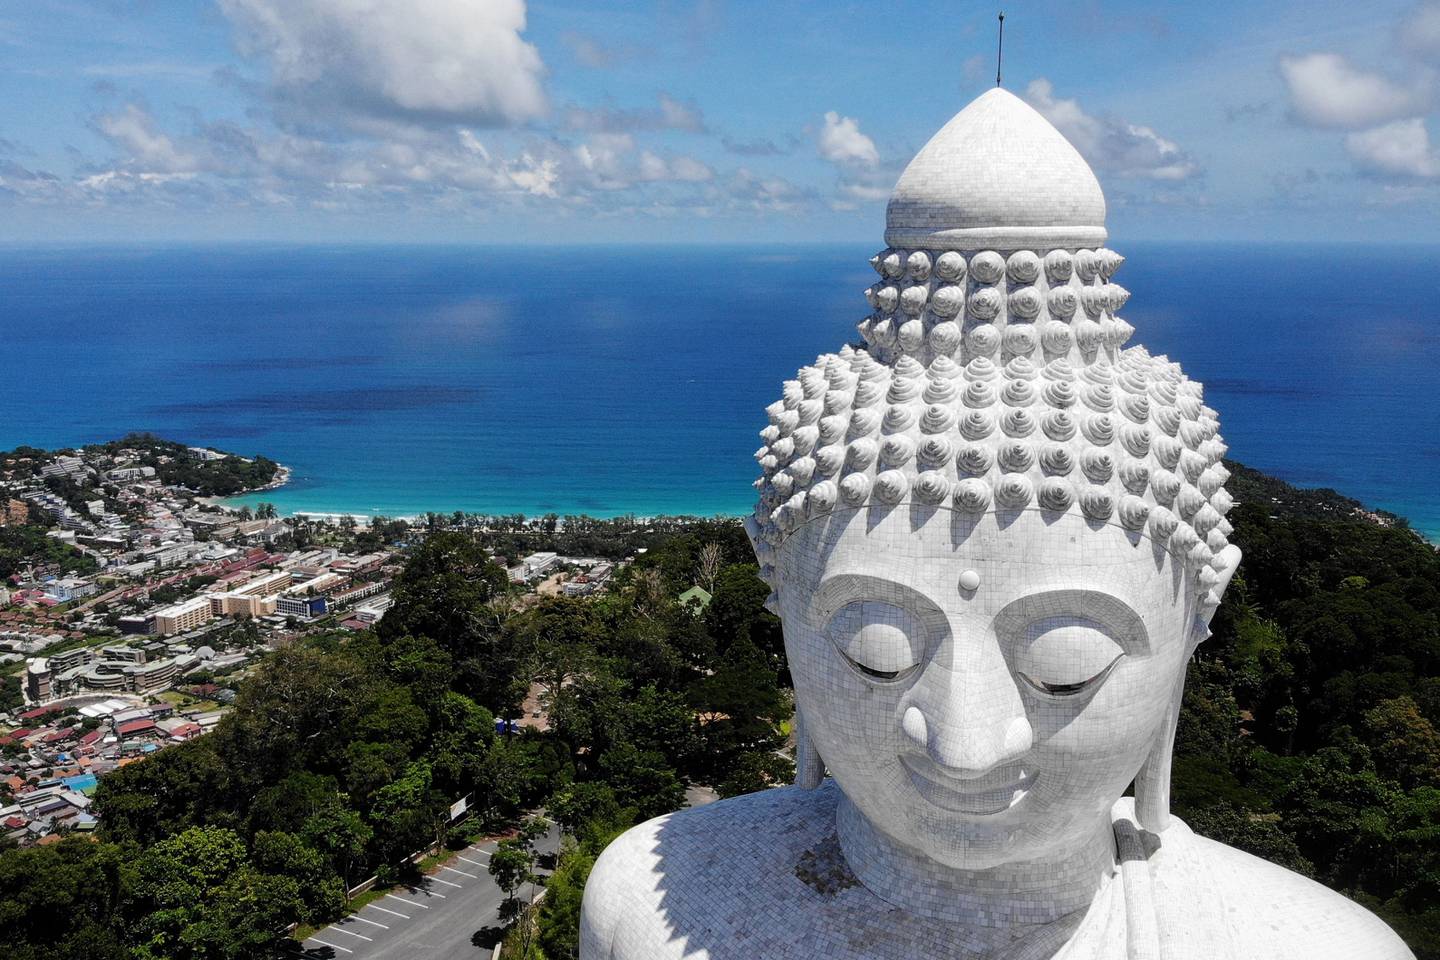 Phuket's Big Buddha and Kata Beach, a day before the Phuket Sandbox tourism scheme launched on July 1. AFP